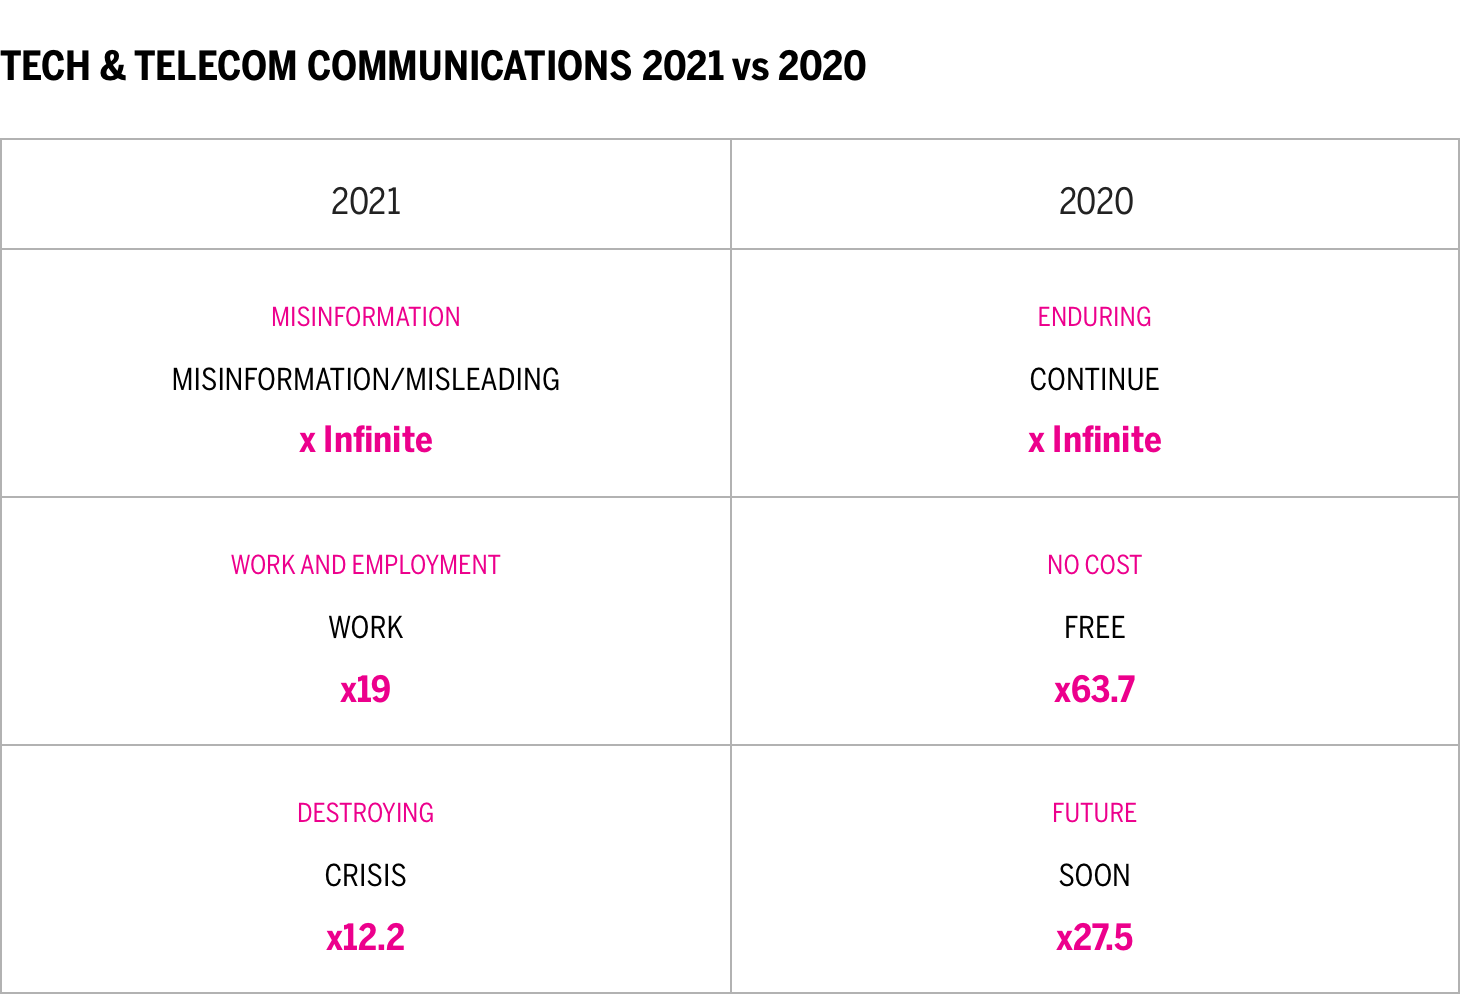 Tech & telecom communications 2021 vs 2020 chart